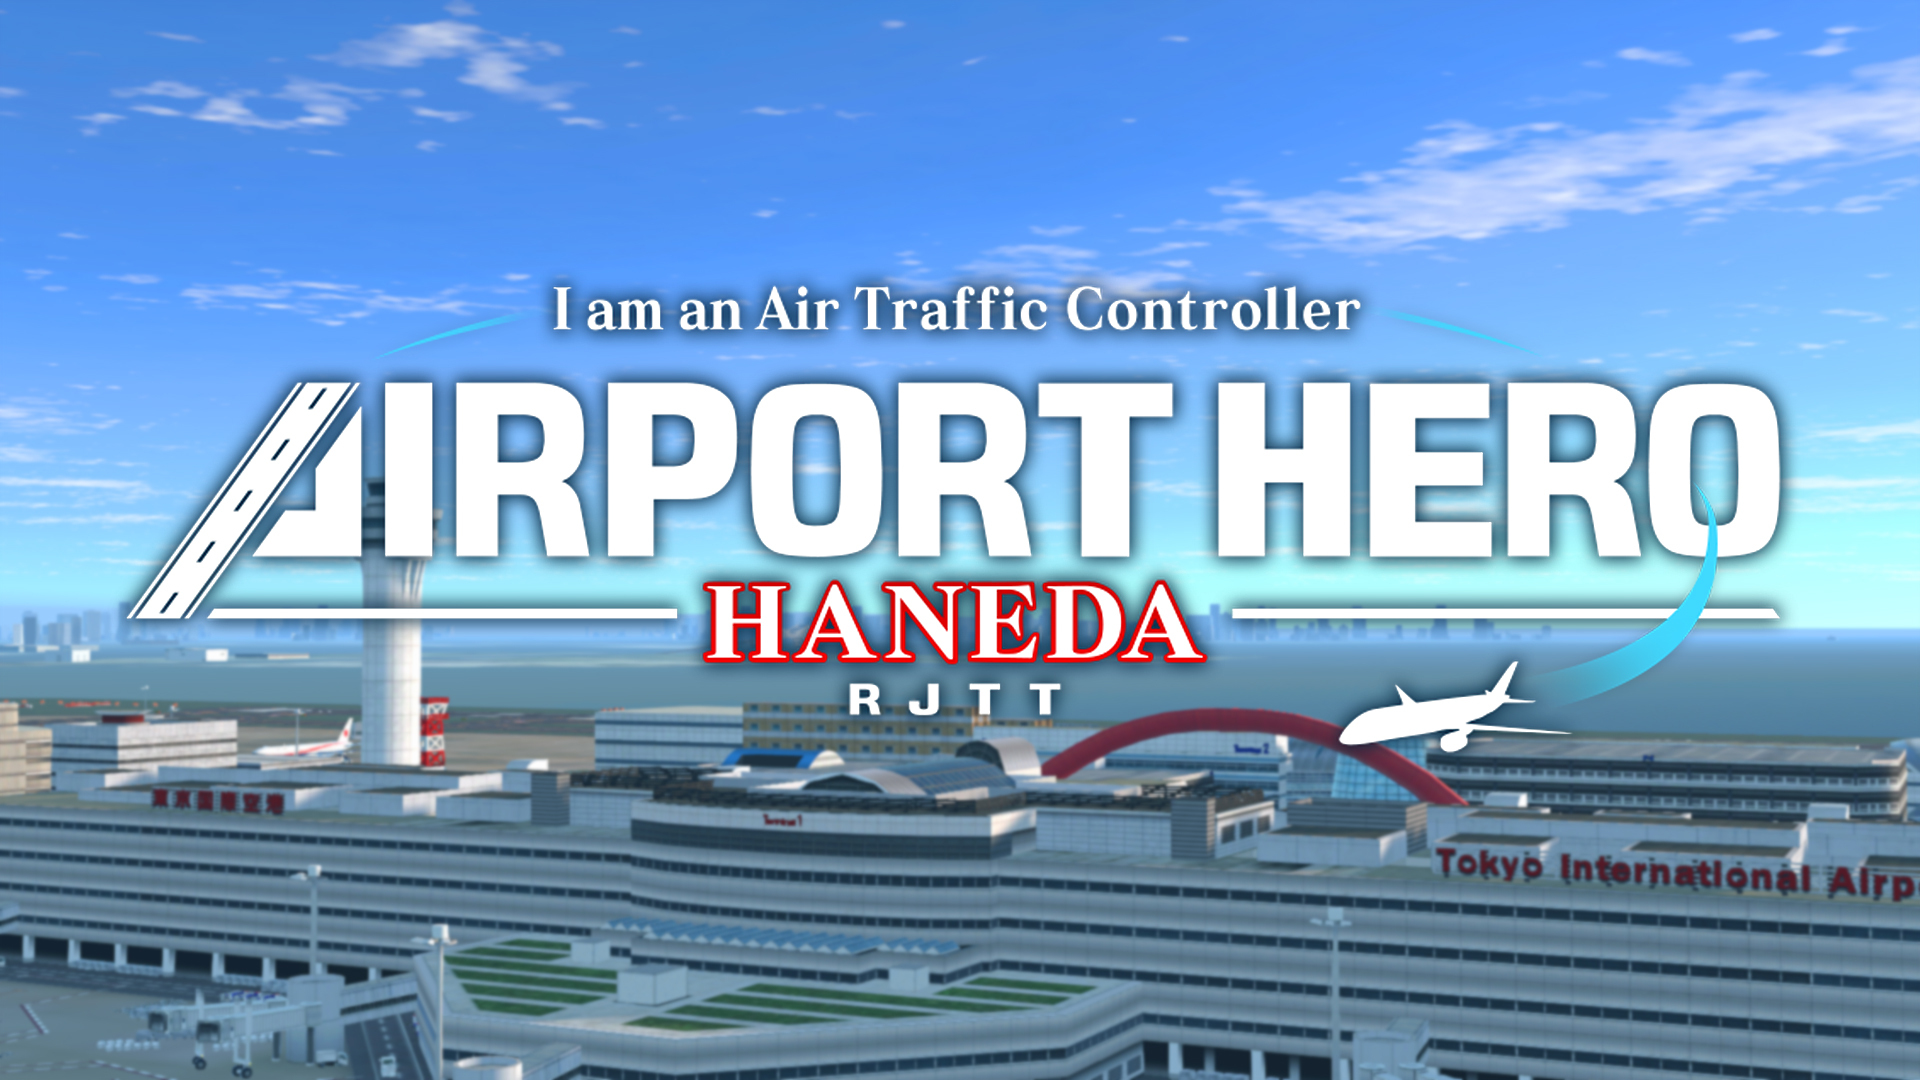 I am an Air Traffic Controller - AIRPORT HERO HANEDA